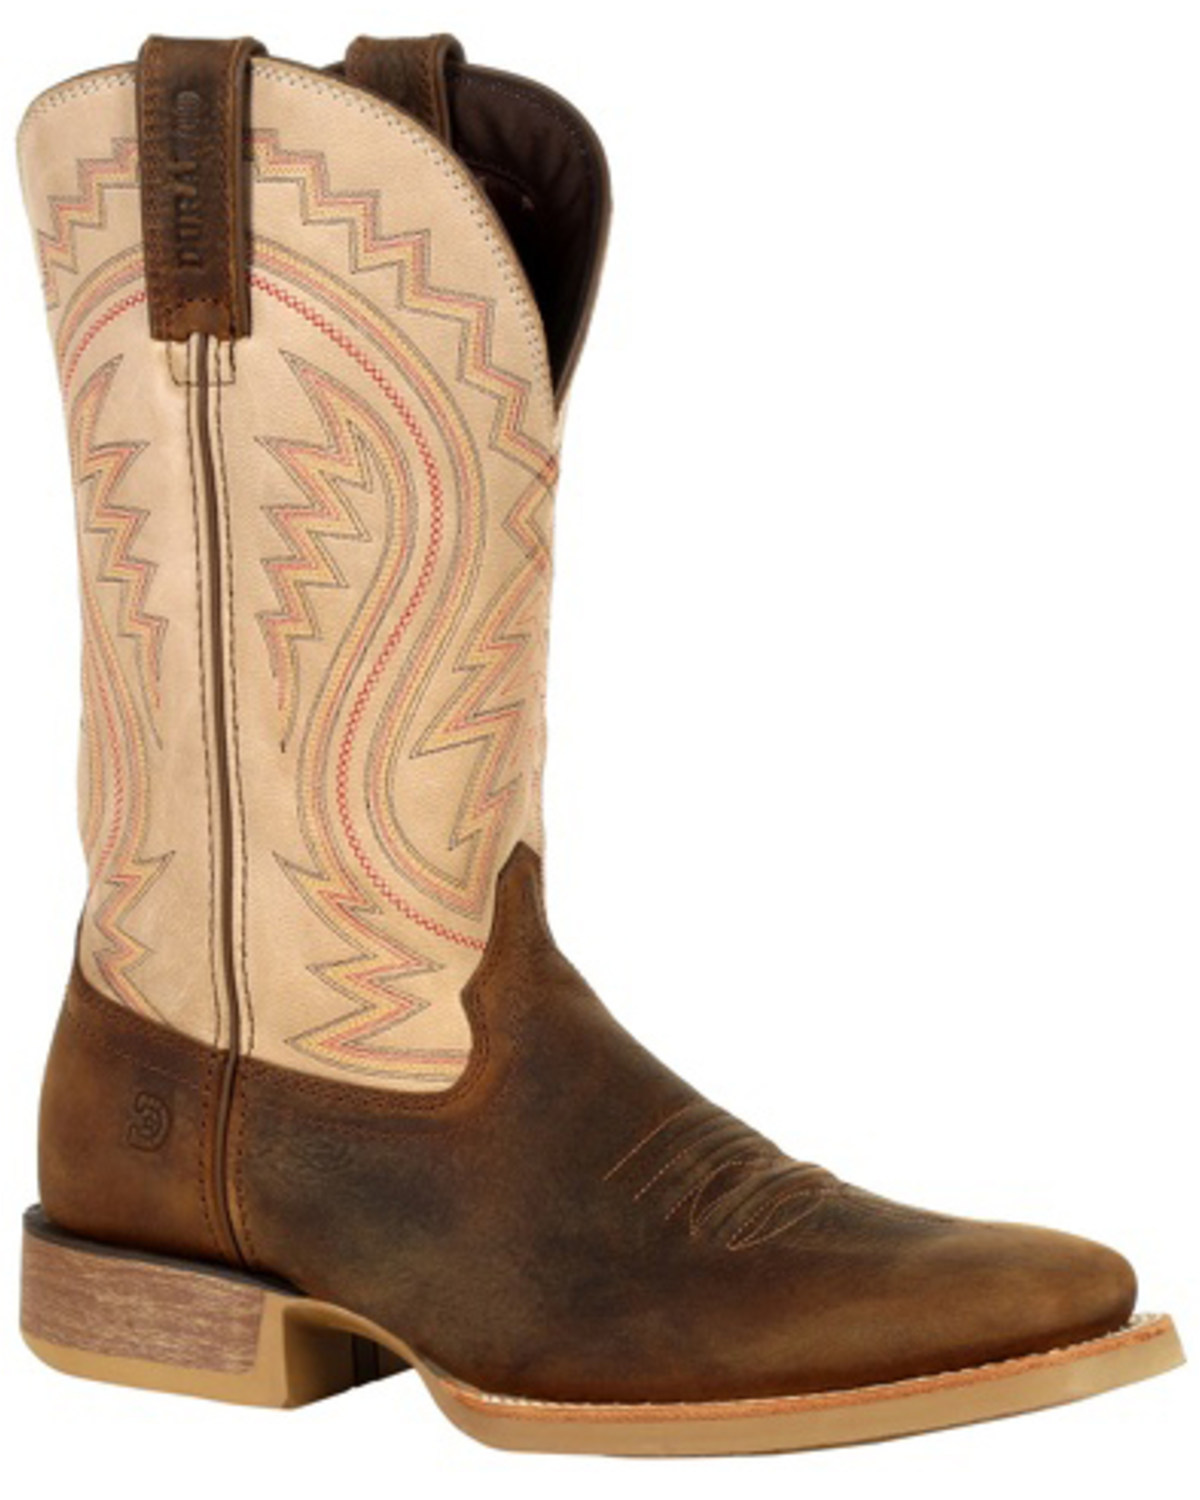 Durango Men's Rebel Pro Western Boots - Broad Square Toe